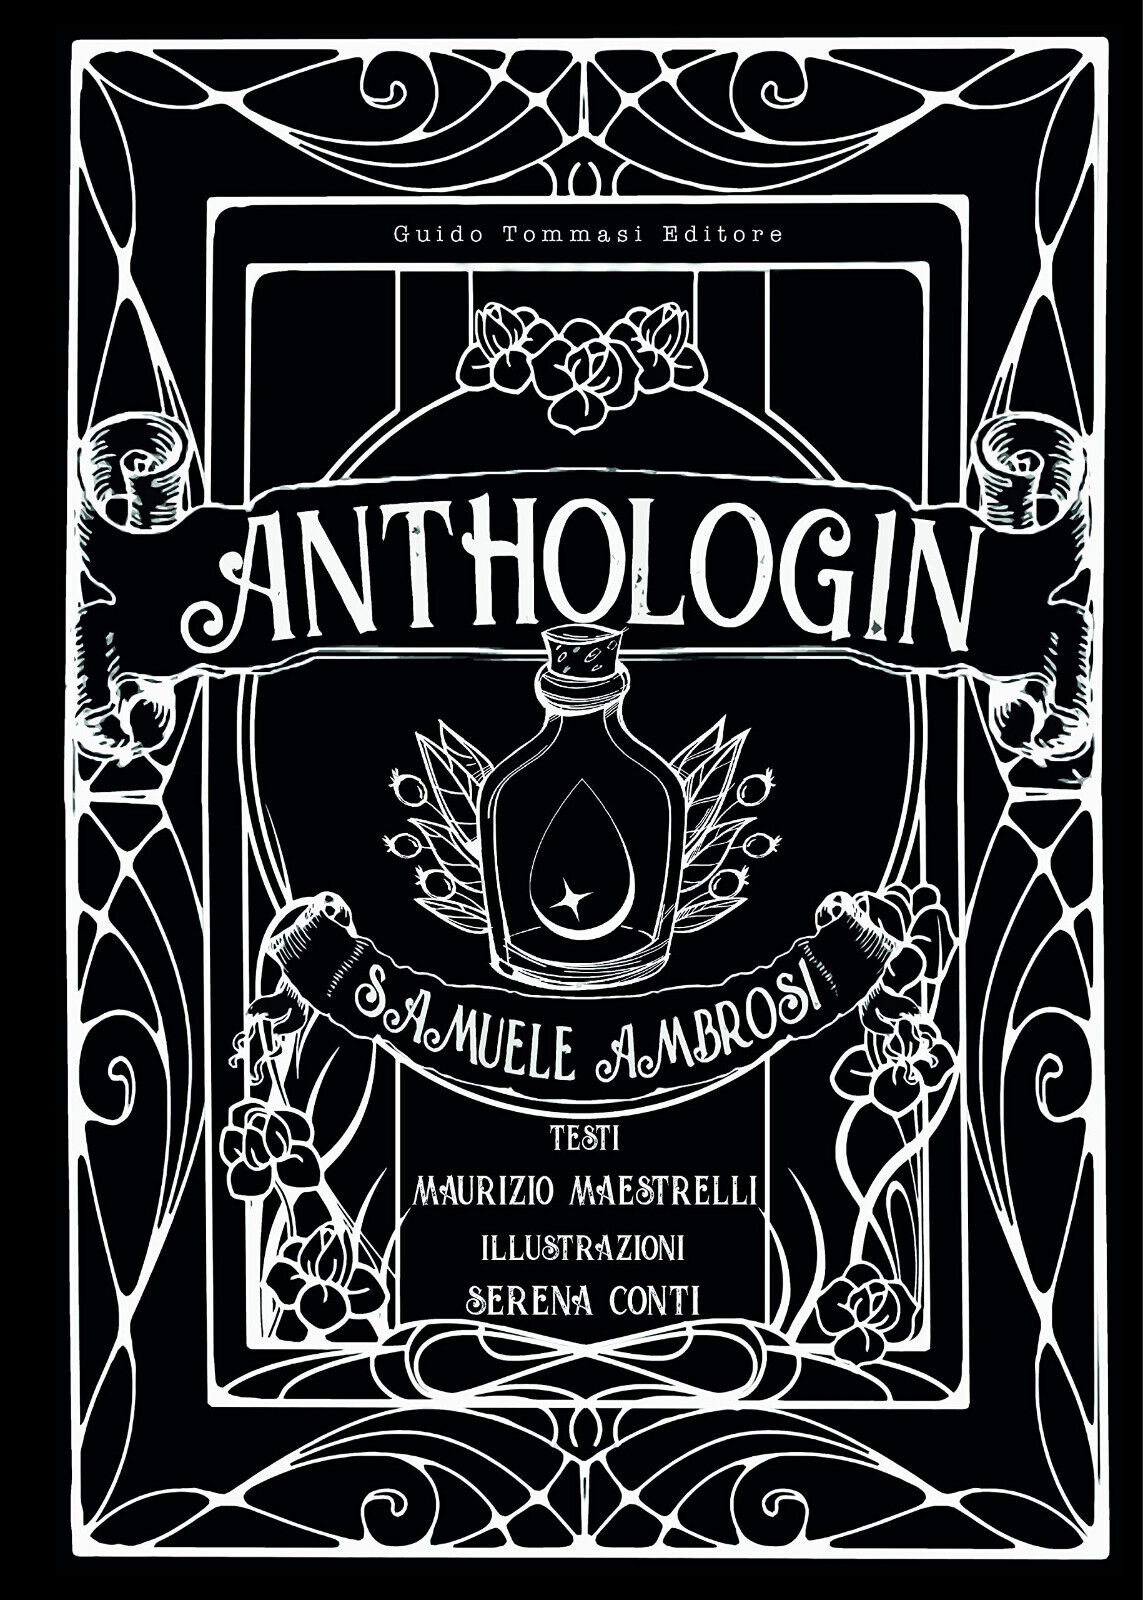 Anthologin - Samuele Ambrosi, Maurizio Maestrelli - Guido Tommasi editore, 2020